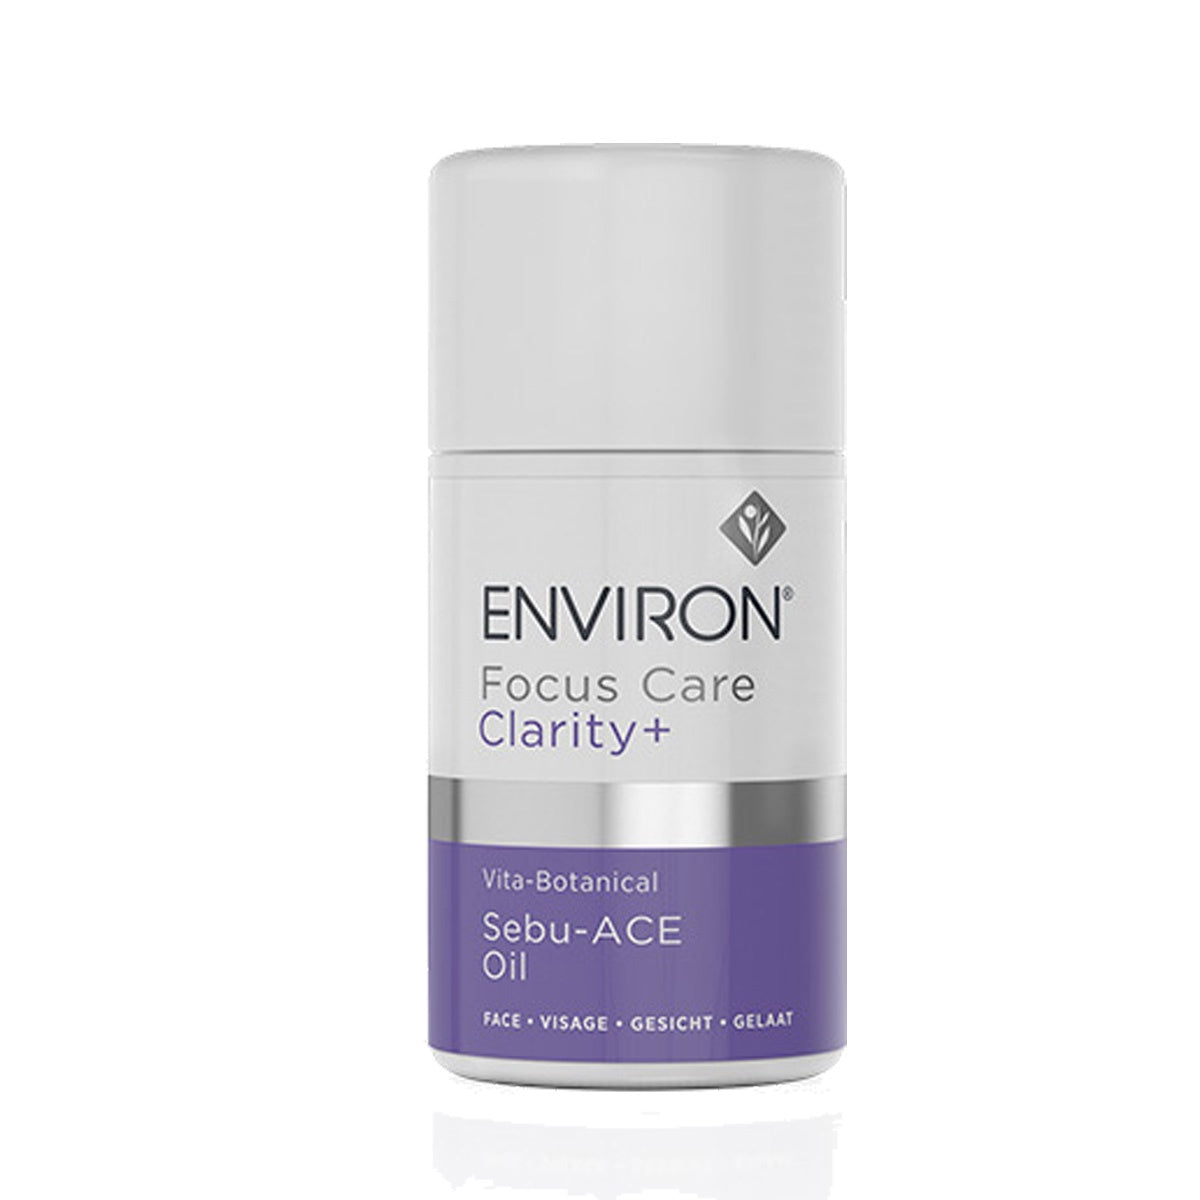 ENVIRON (Focus Care Clarity+) Sebu-ACE Oil